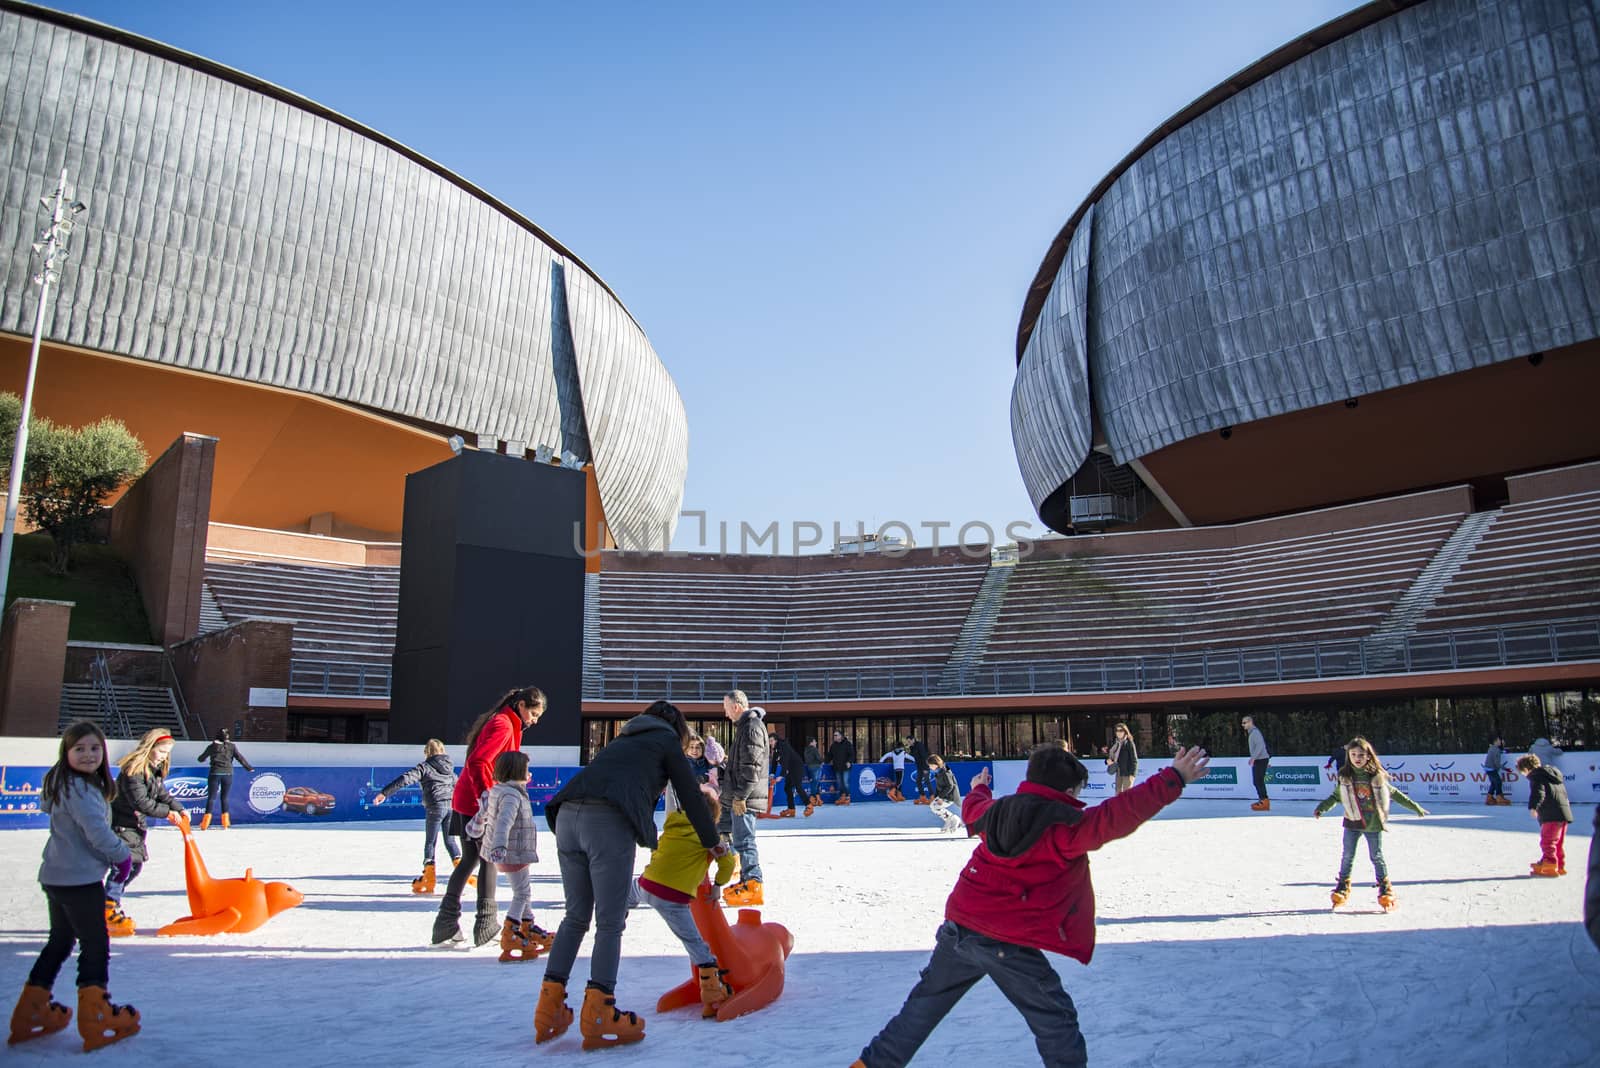 Ice skating ring outside the Auditorium Parco della Musica by edella